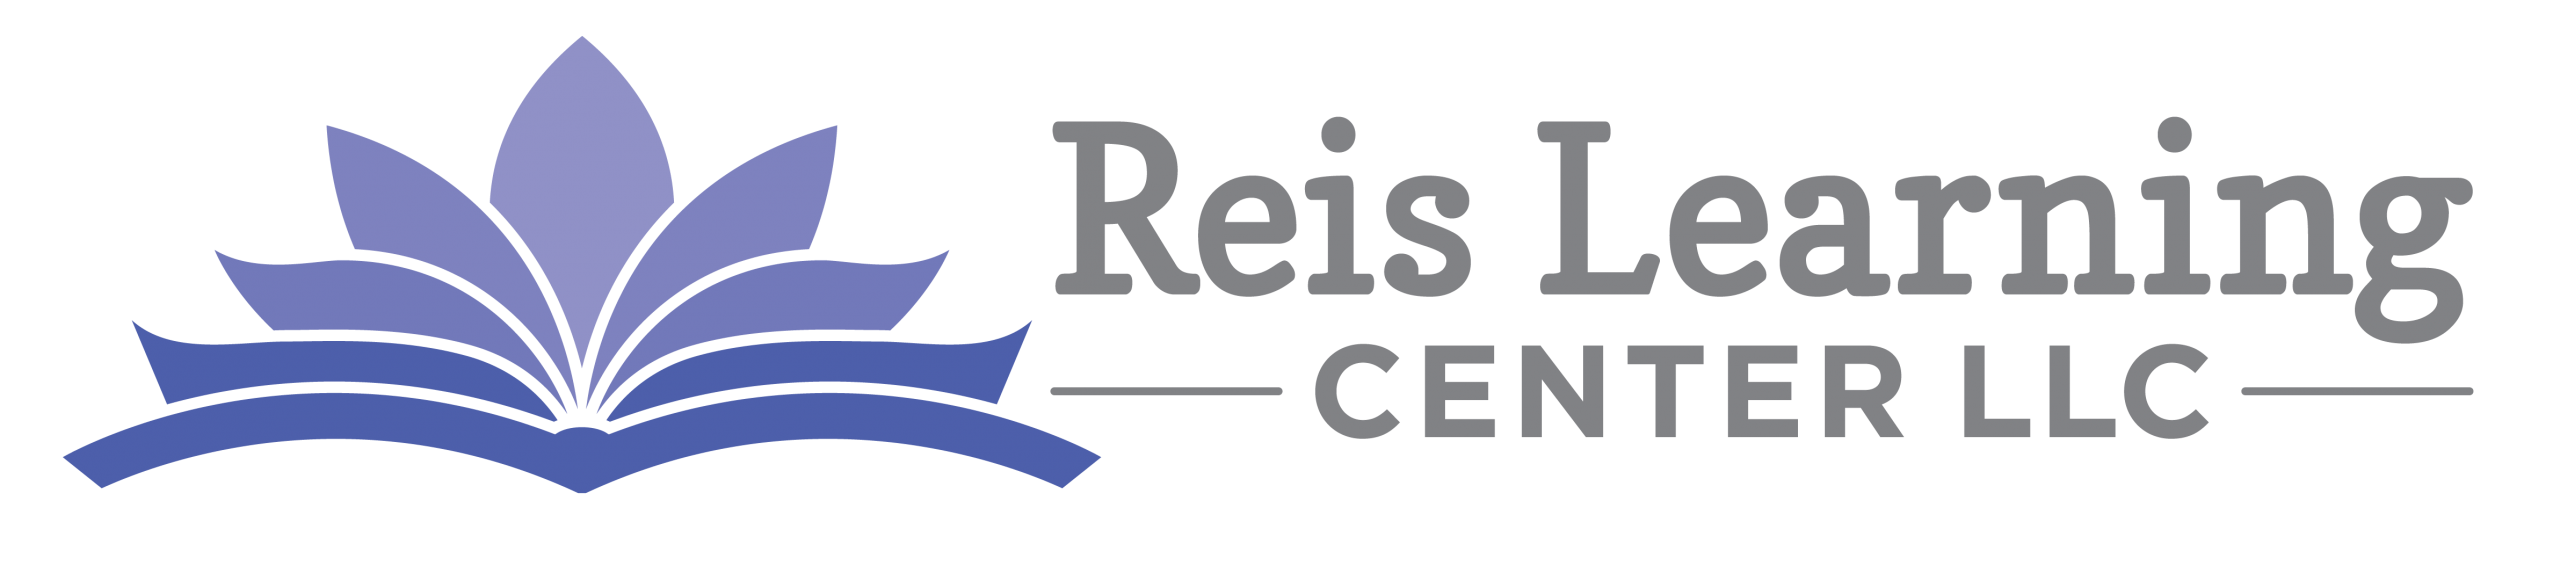 Reis Learning Center | New Milford, CT | 860.354.0854